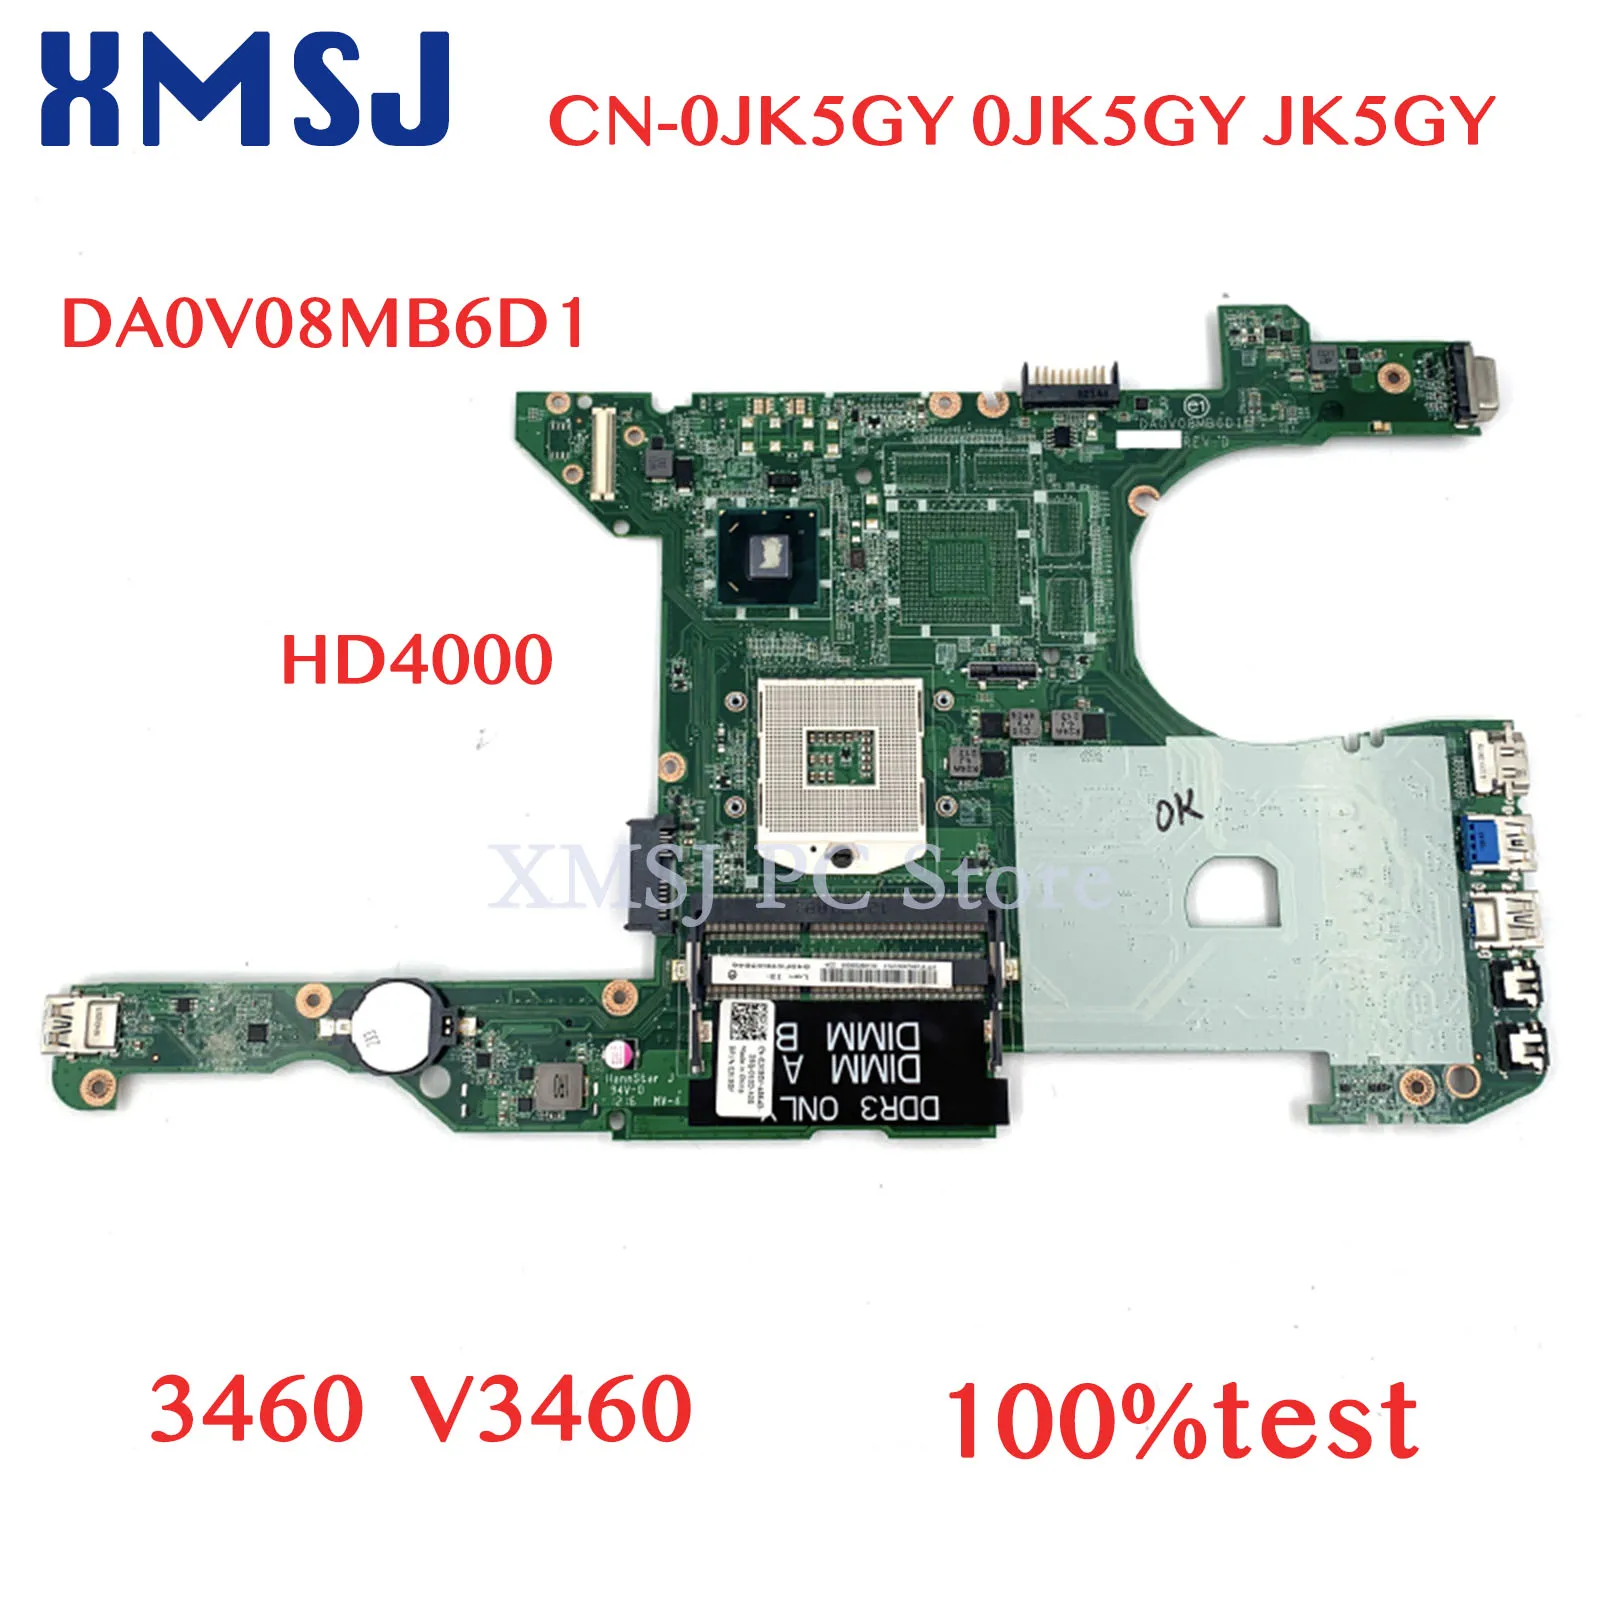 XMSJ CN-0JK5GY 0JK5GY JK5GY DA0V08MB6D1 Laptop Motherboard For Dell Vostro 3460 V3460 Main Board HD4000 DDR3 full test